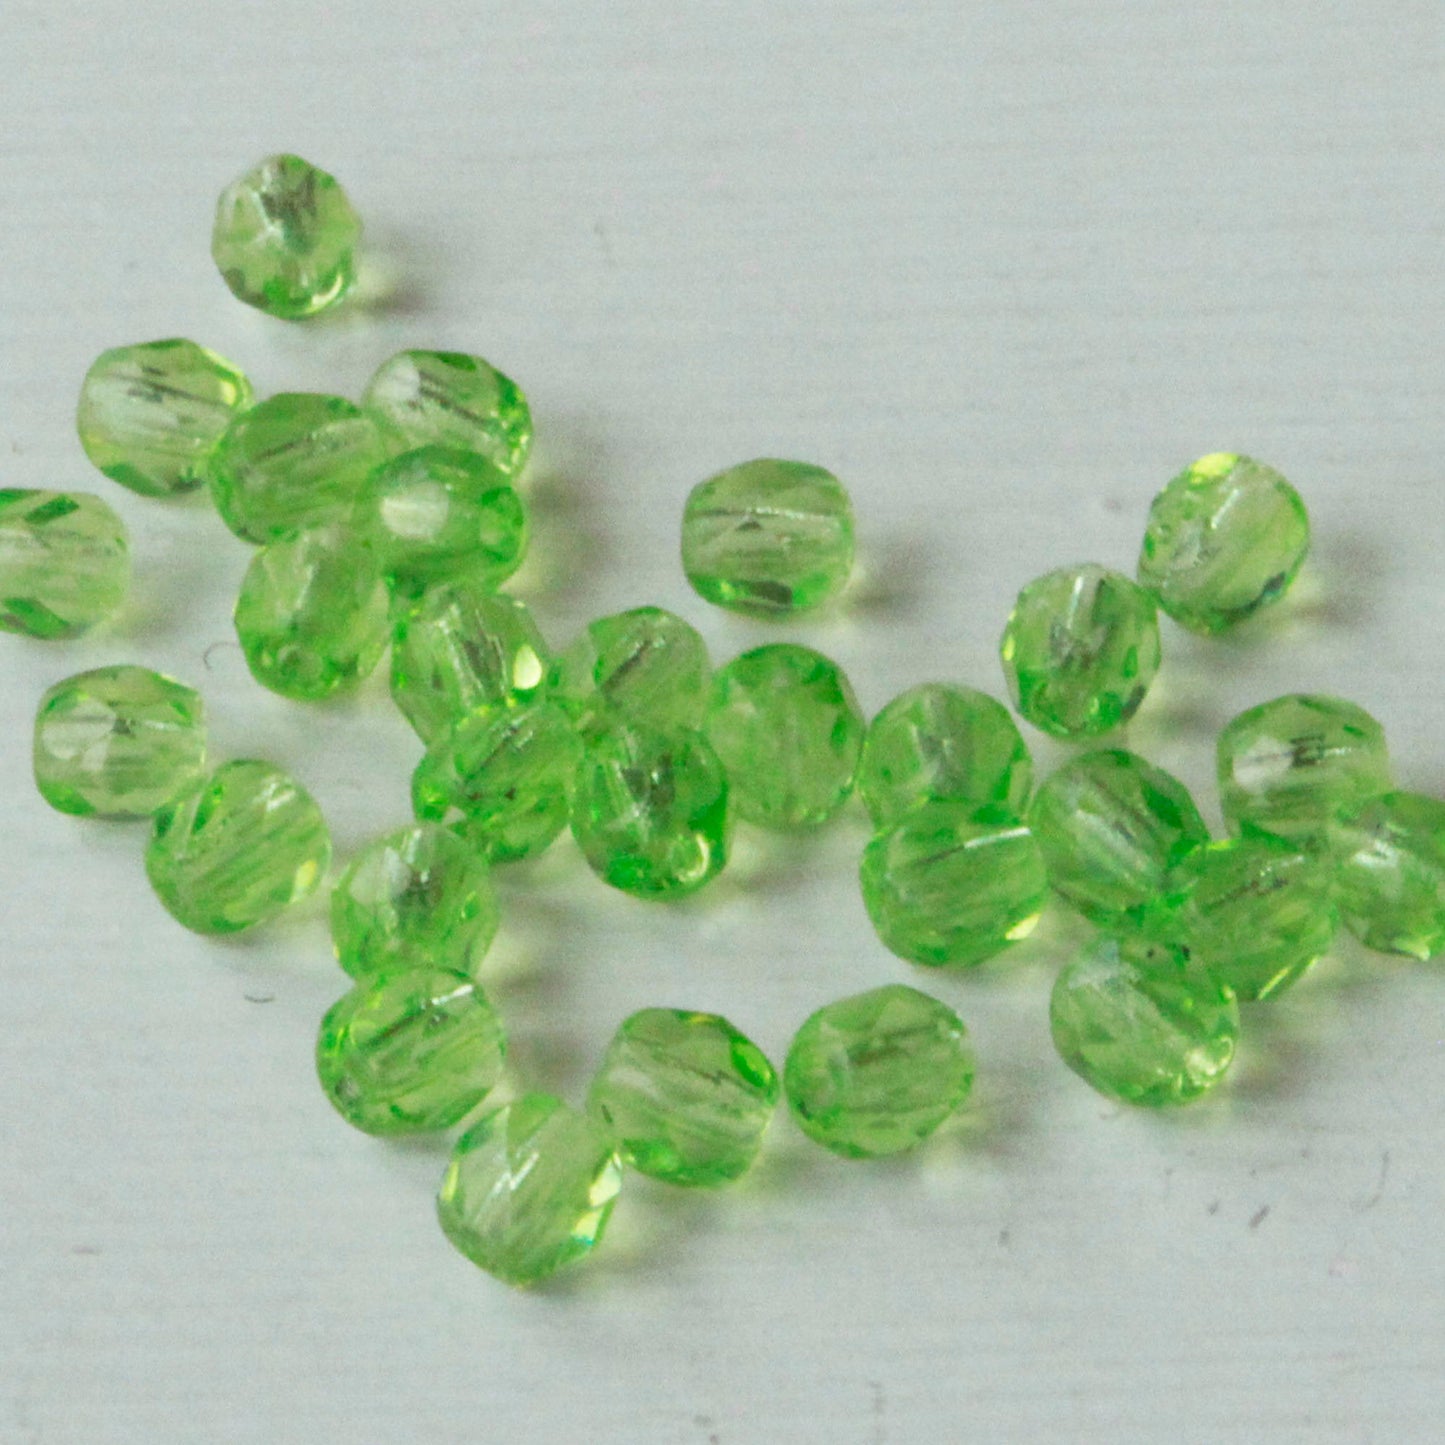 4mm Round Firepolished Beads - Transparent Peridot Green - 60 Beads